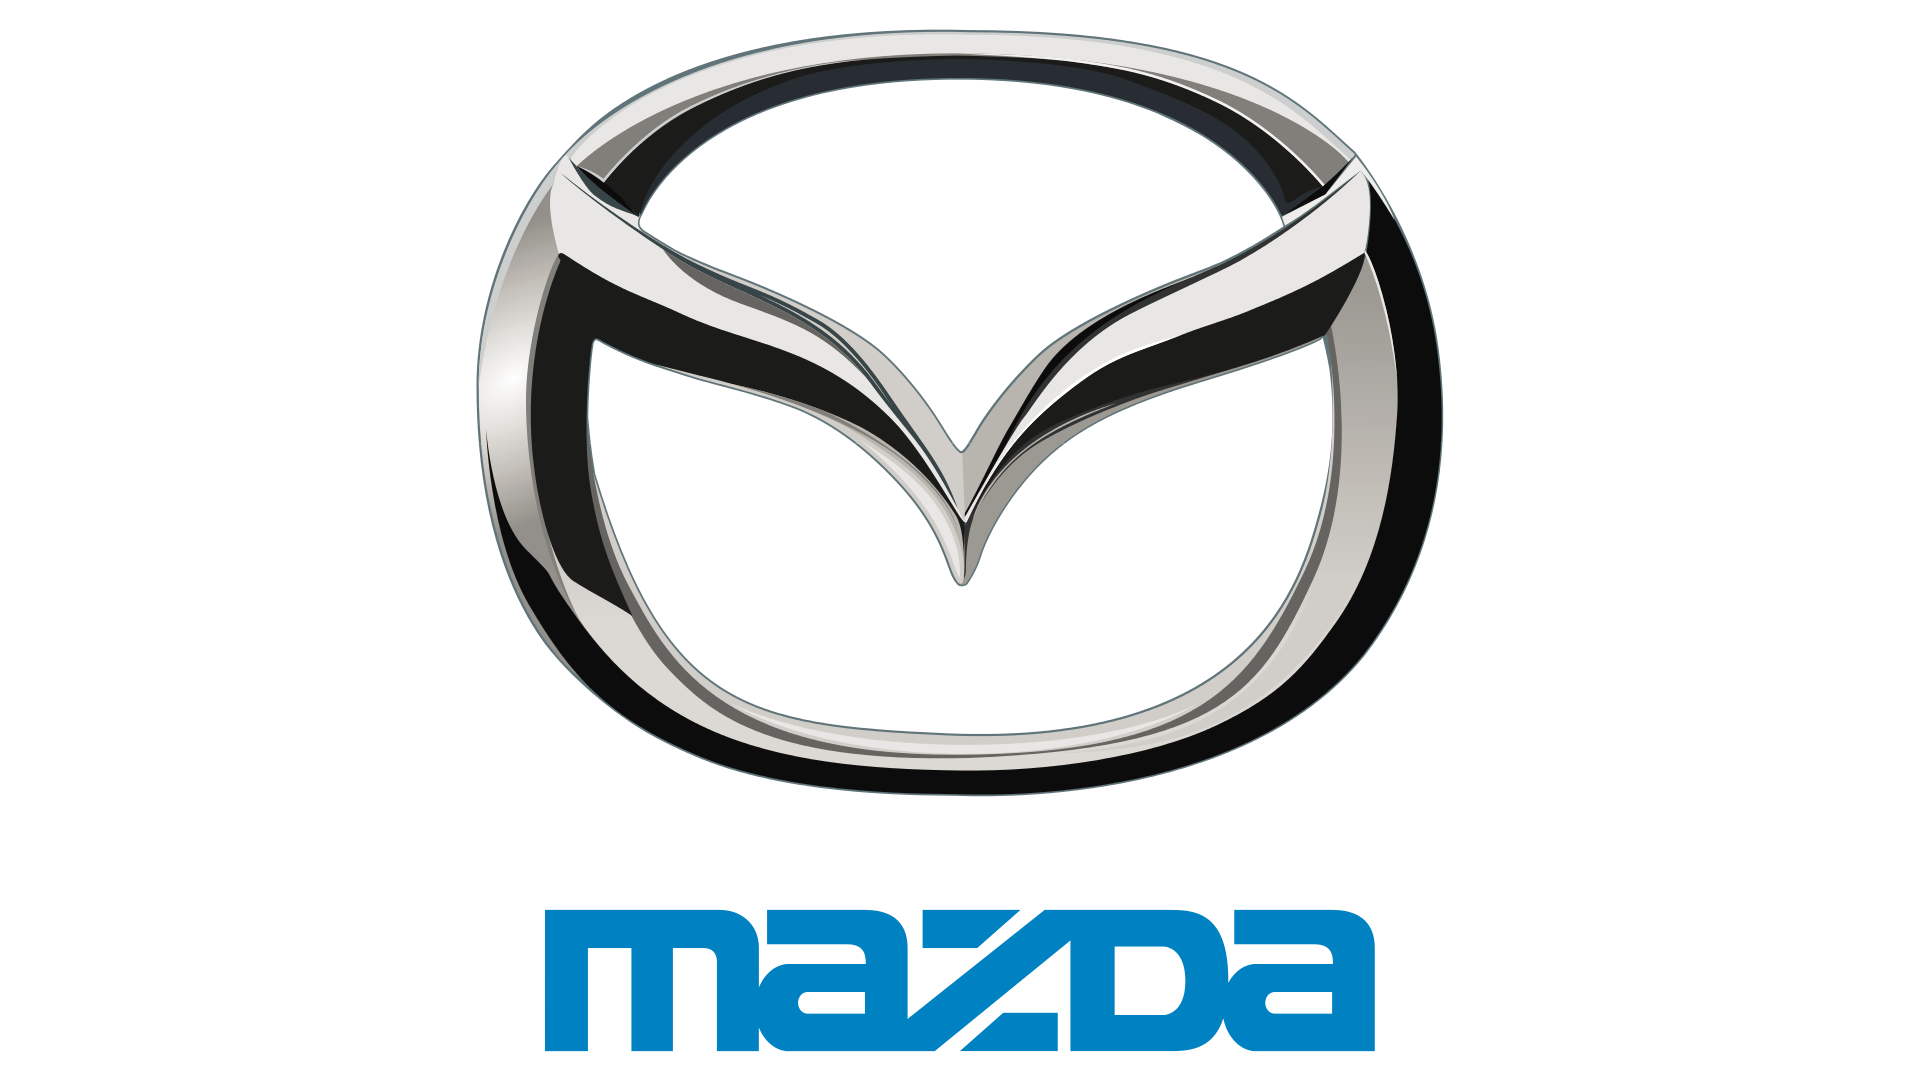 Le moteur rotatif de Mazda a 50 ans